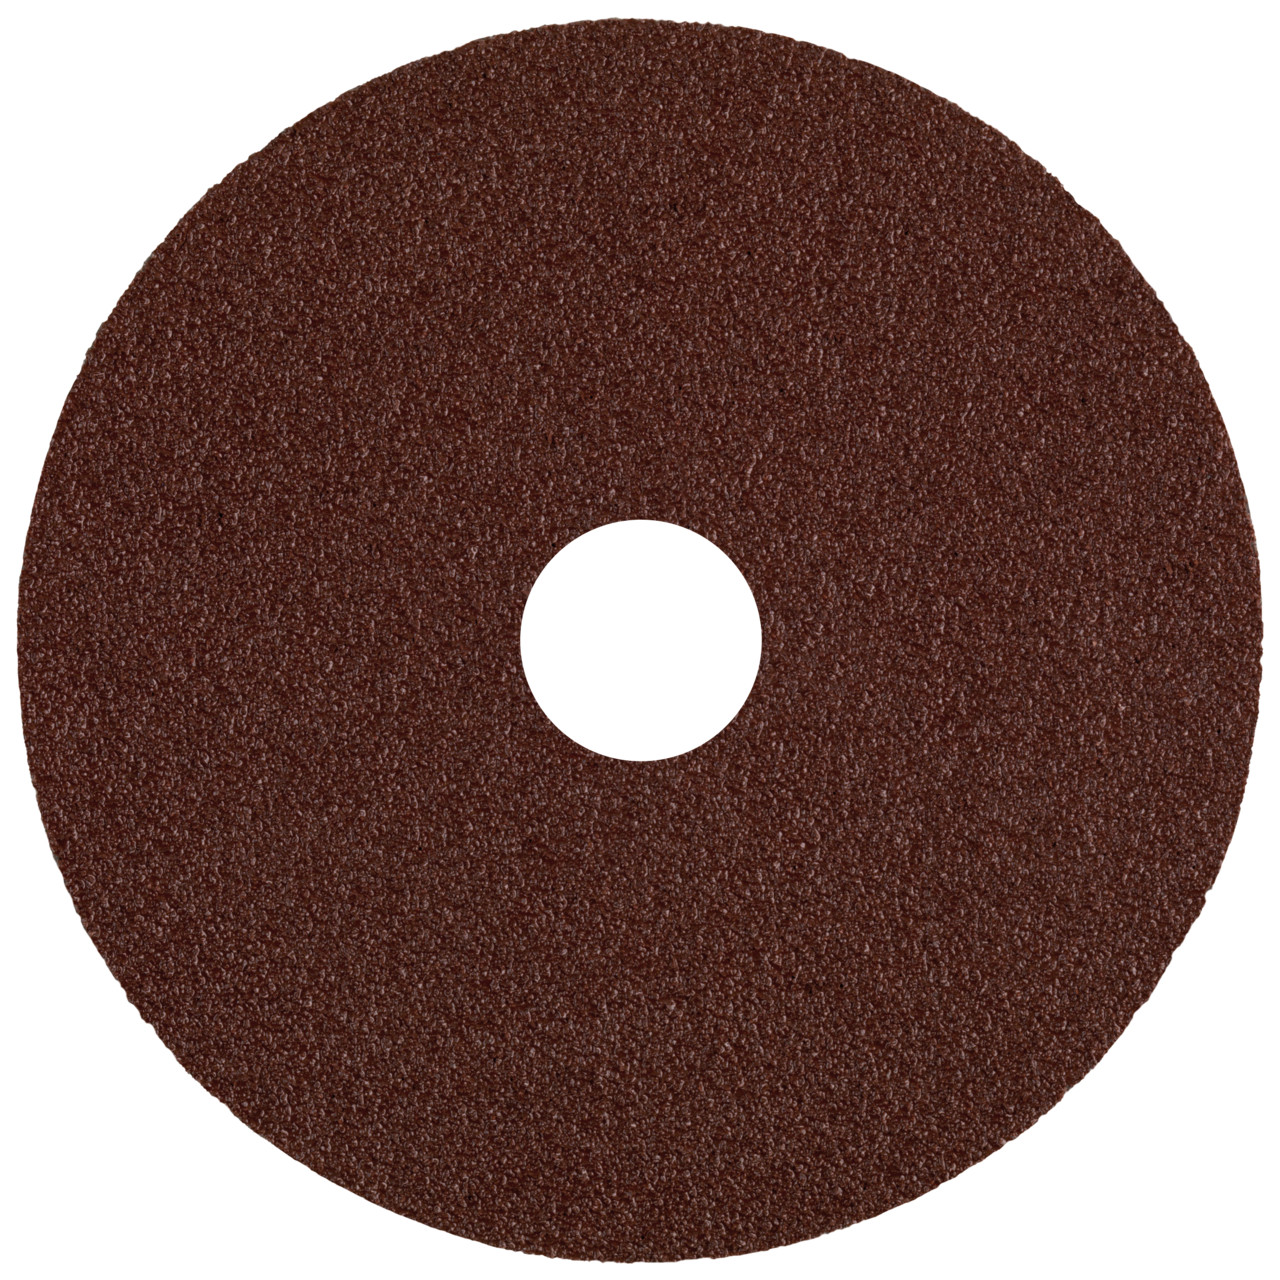 TYROLIT A-B02 V Vulcanized fibre disc DxH 125x22 For steel, non-ferrous metals and wood, P100, shape: DISC, Art. 34286505